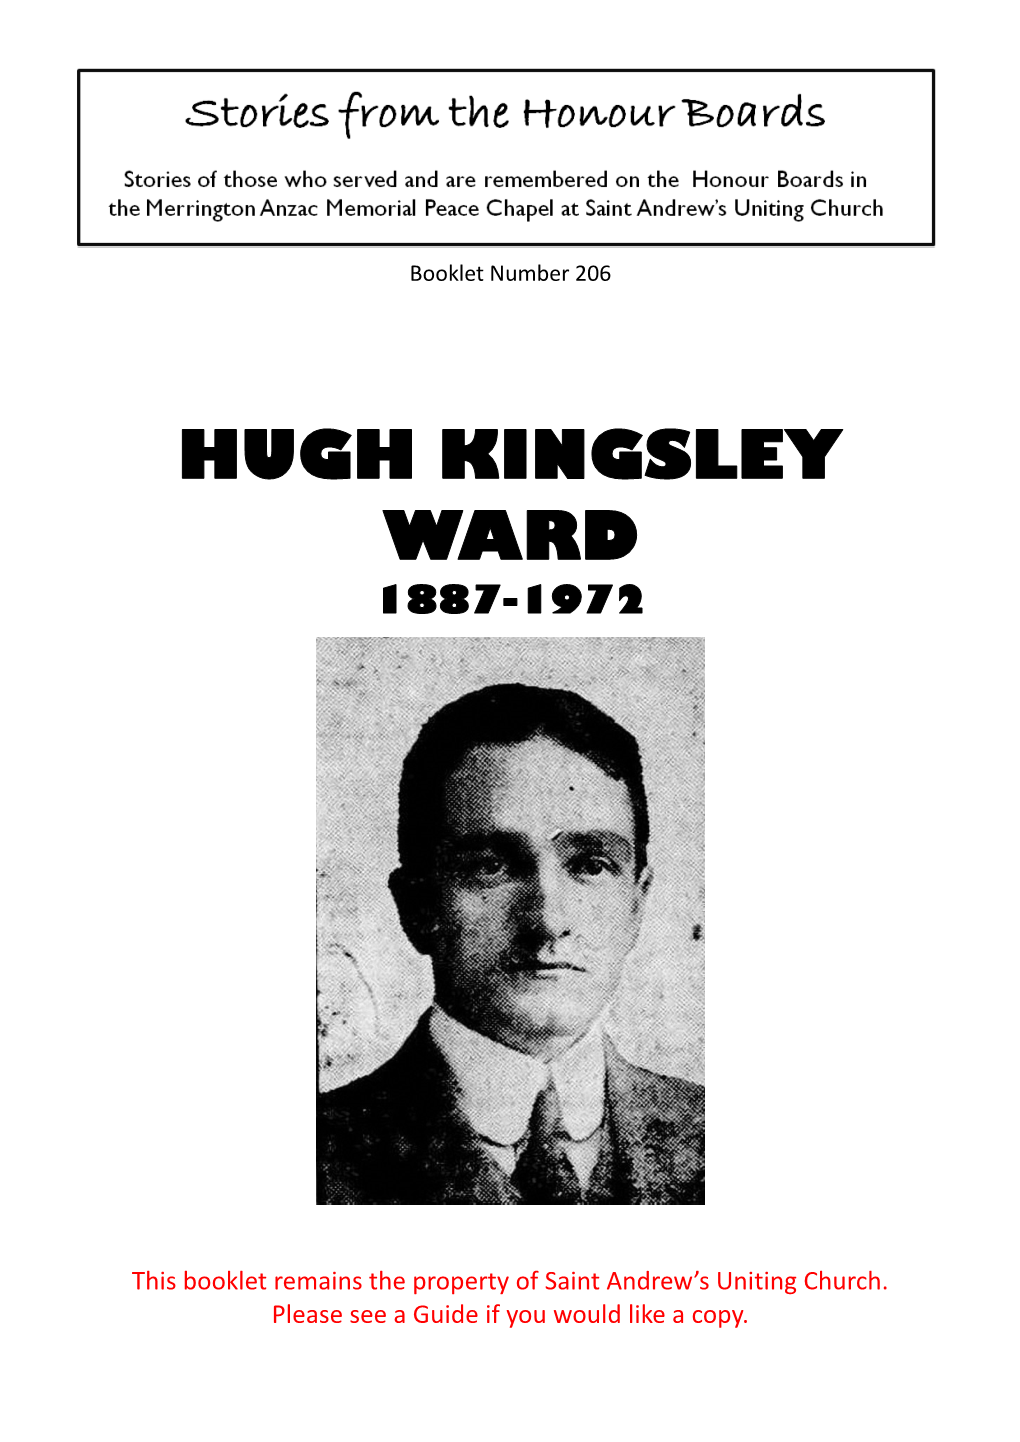 Hugh Kingsley Ward 1887-1972